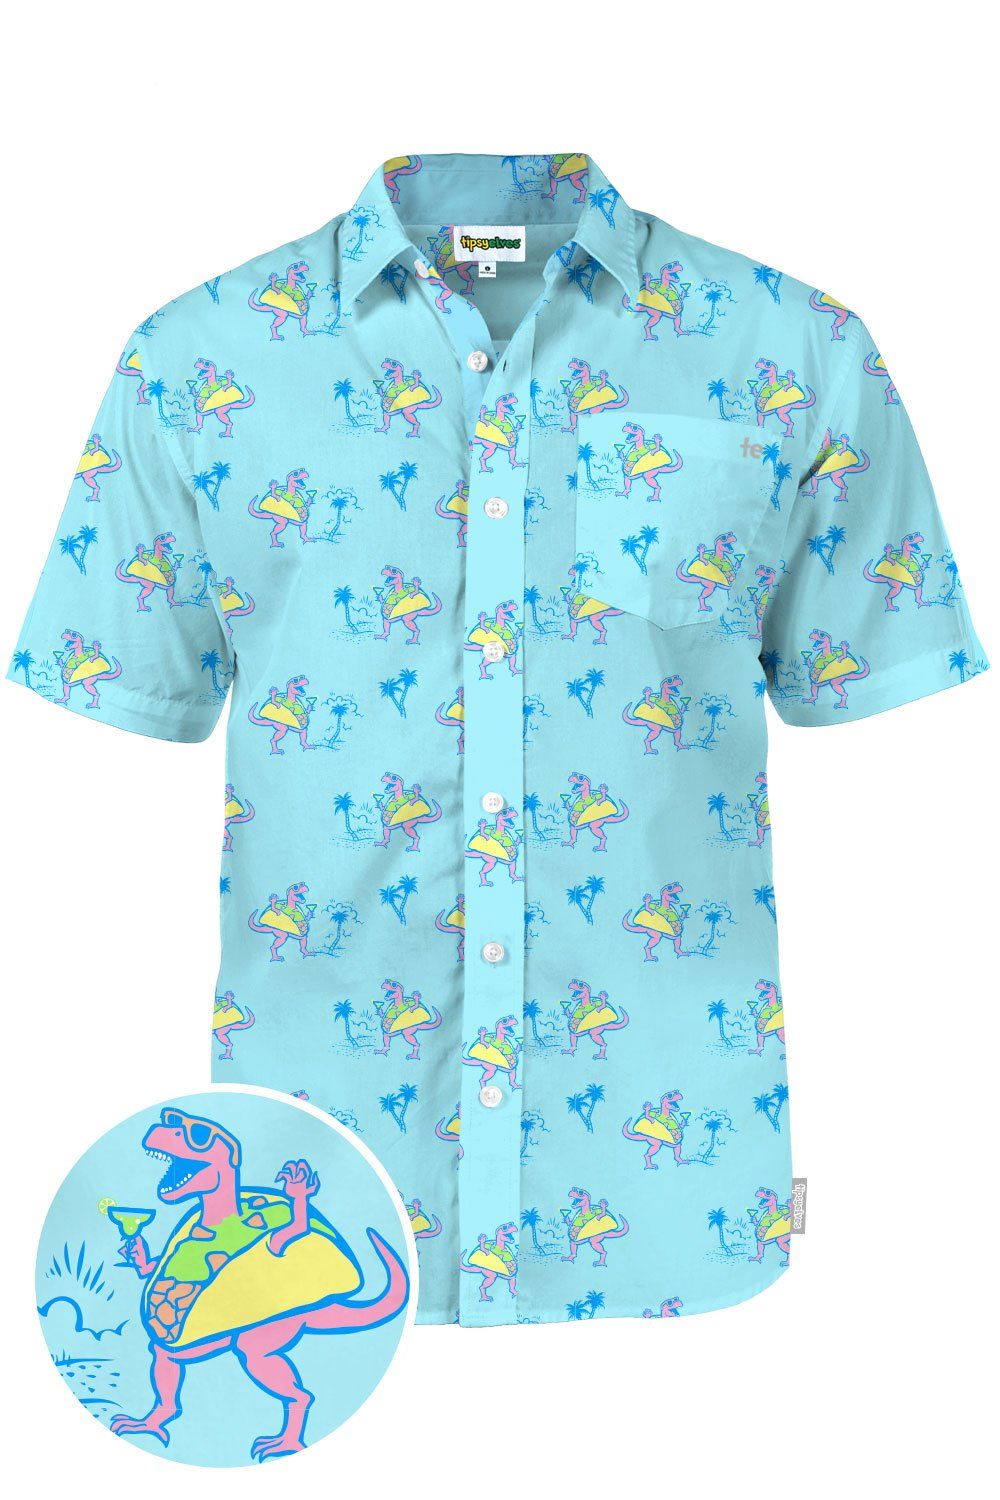 Tacosaurus Blue Nice Design Hawaiian Shirt